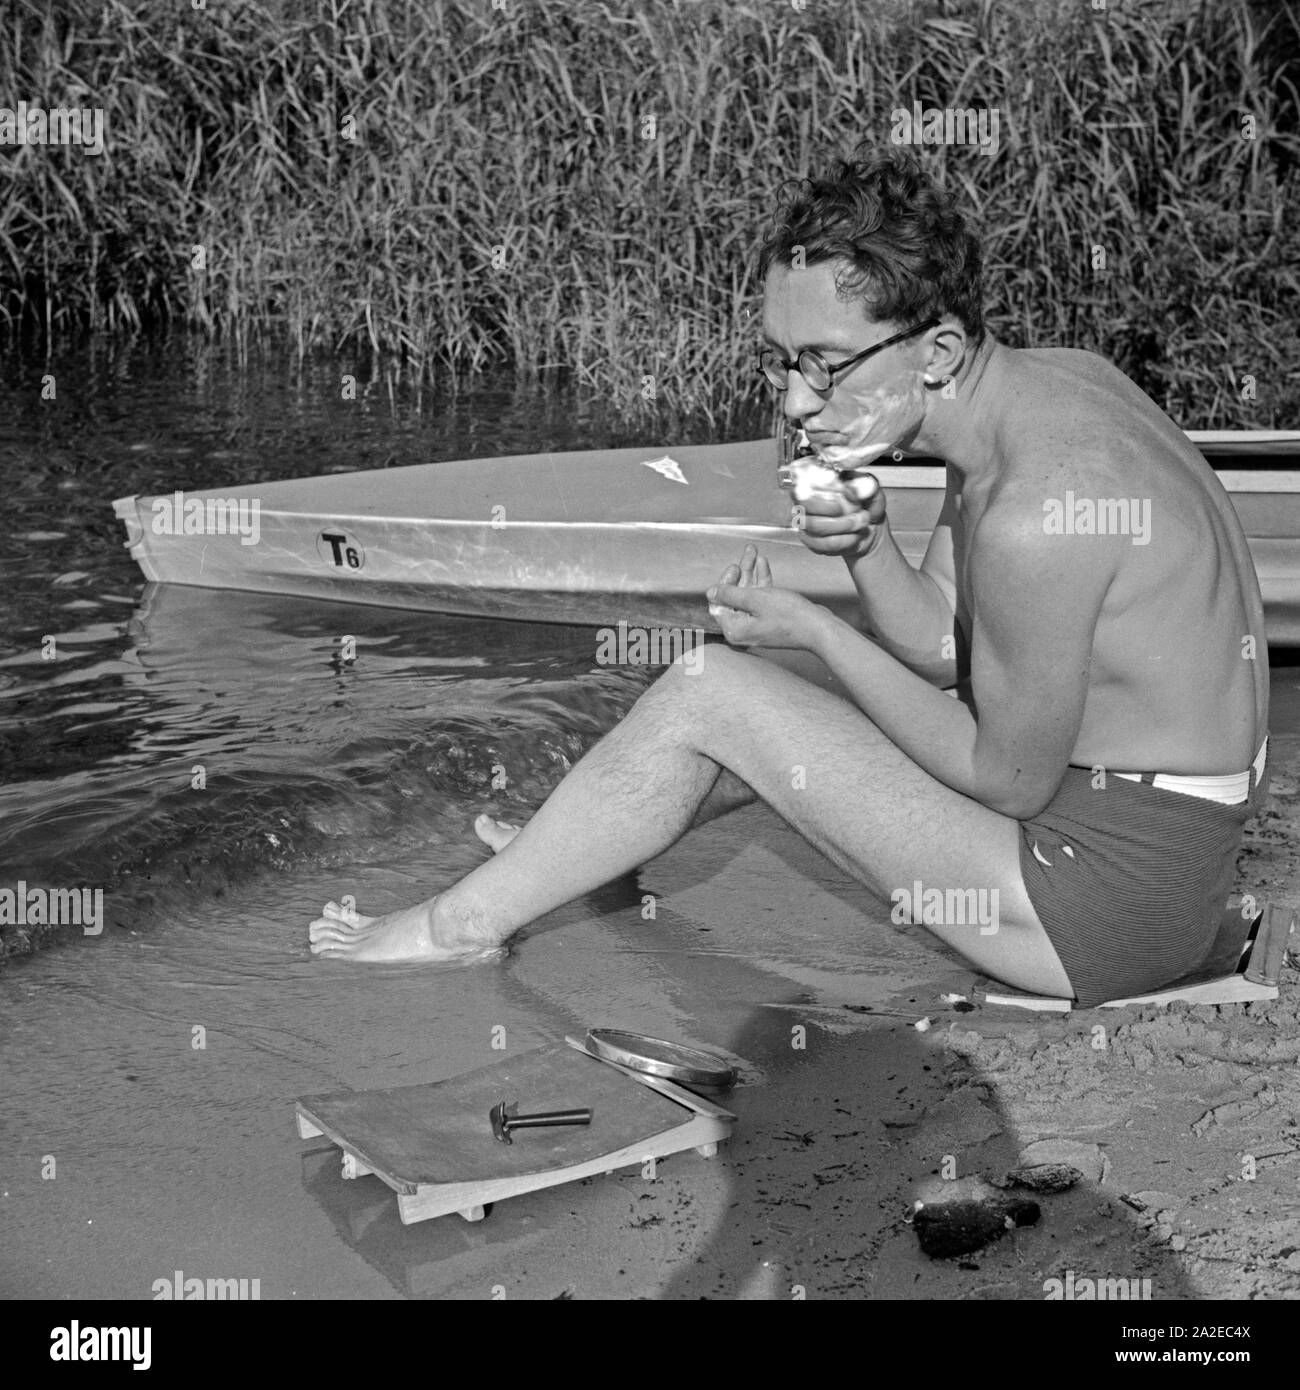 Ein junger Mann rasiert sich am Ufer eines Sees neben einem Klepper Faltboot Typ T6, Deutschland 1930er Jahre. A young man shaving at the shore of a lake, beside a Klepper folding boat, Germany 1930s. Stock Photo